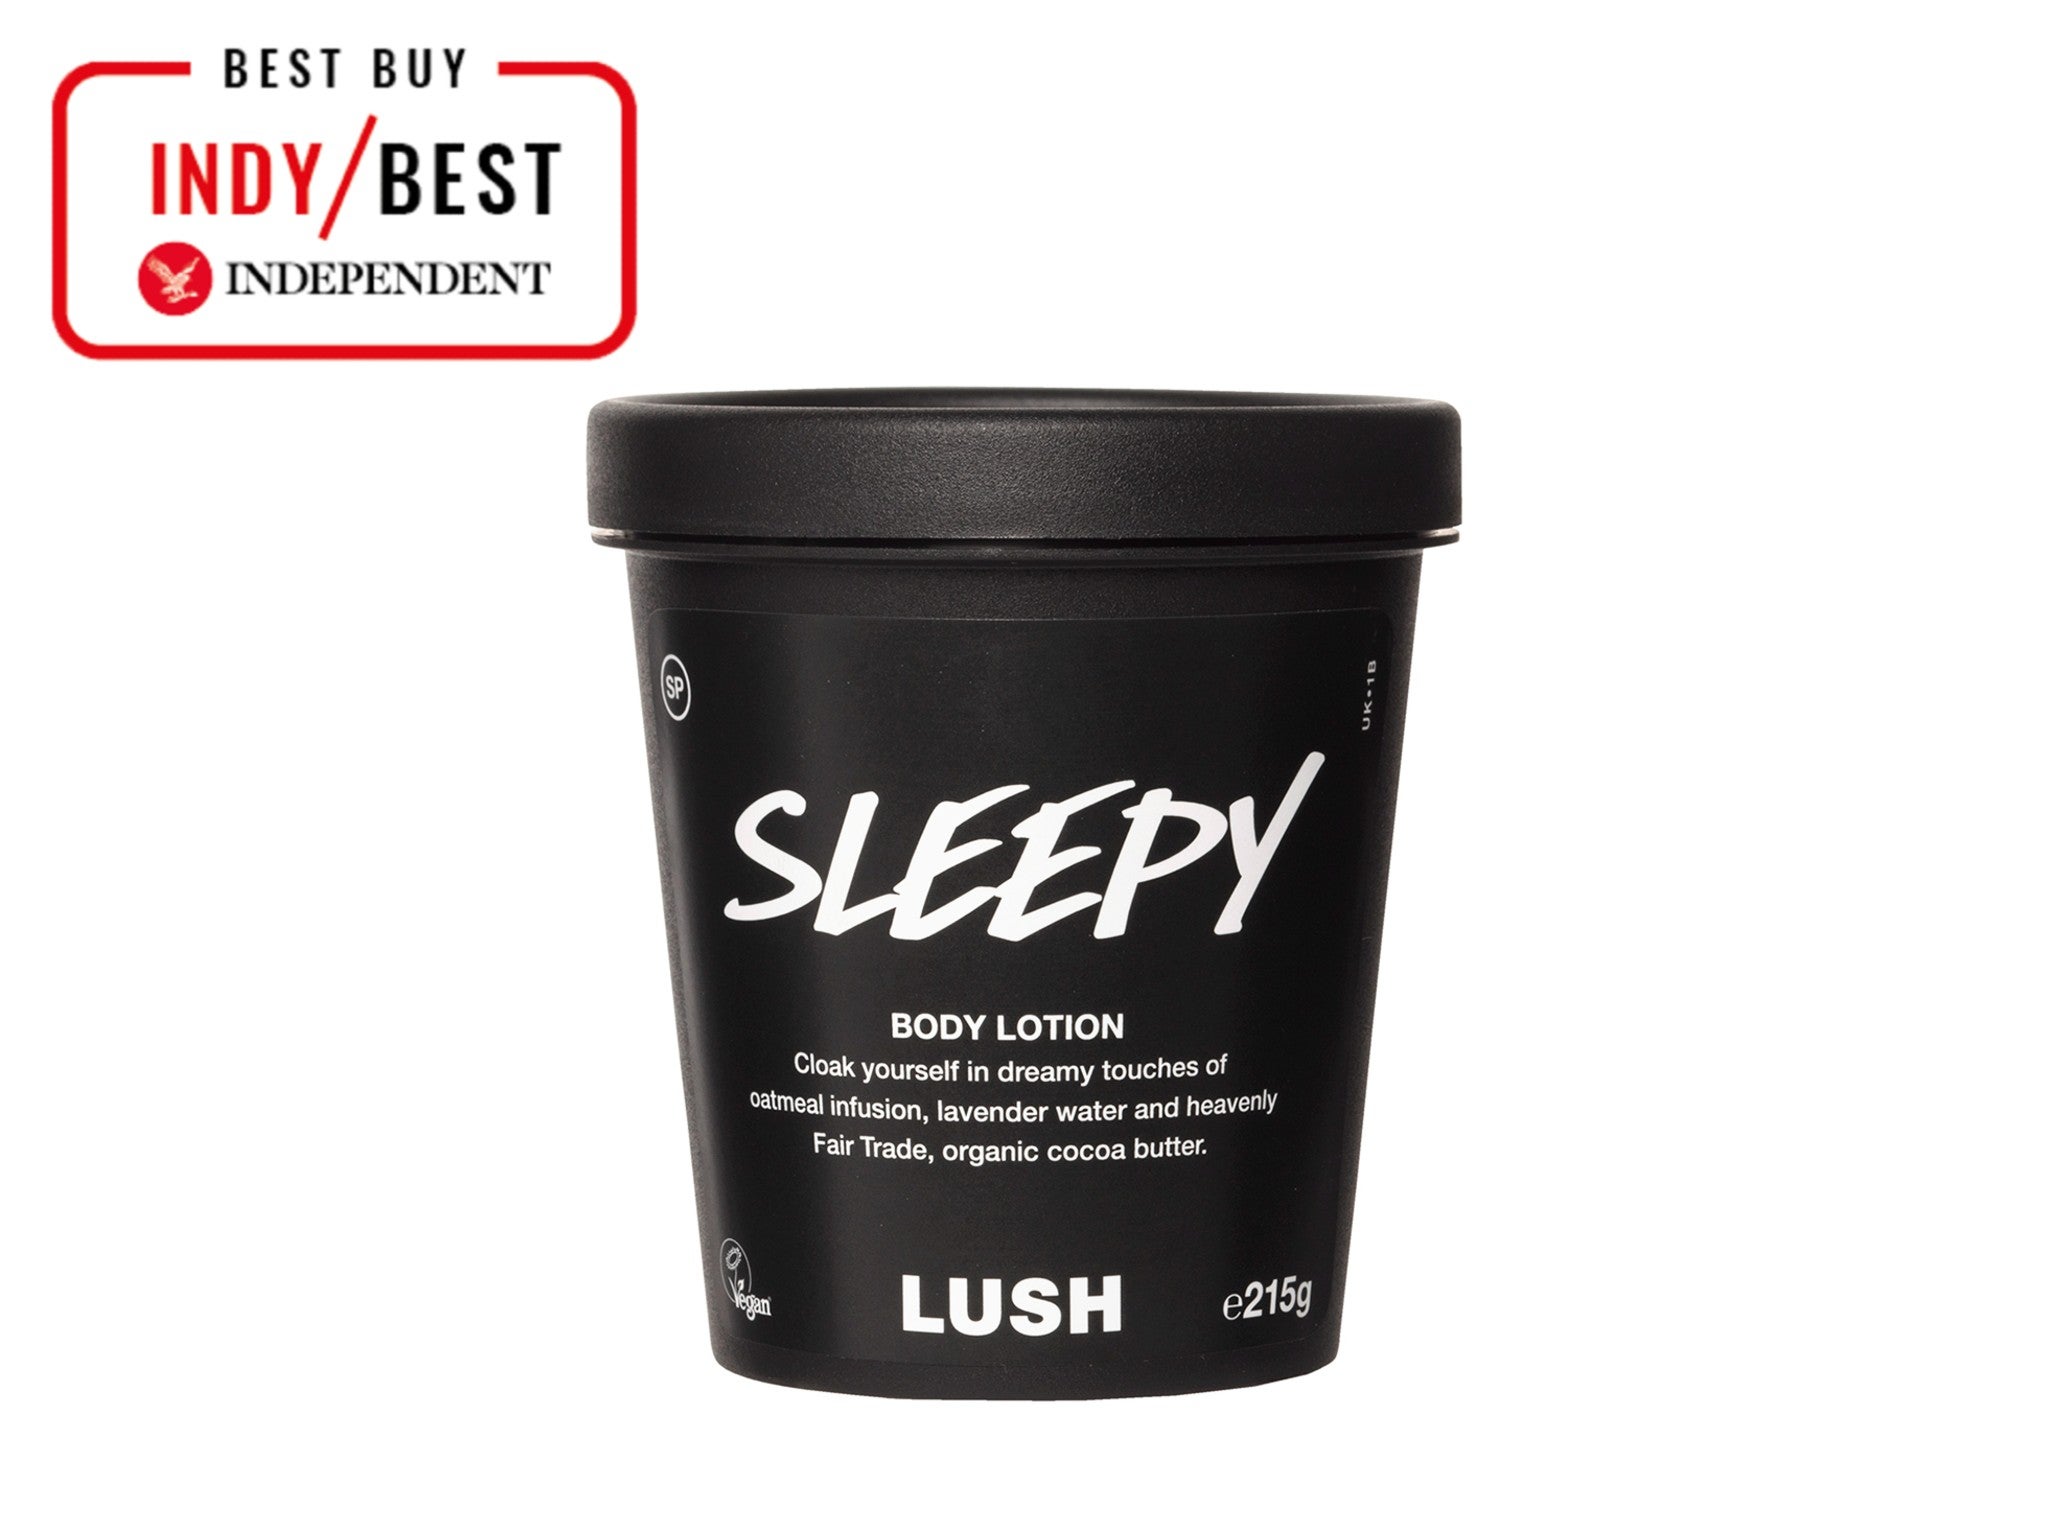 Lush sleepy body lotion, 215g indybest.jpeg